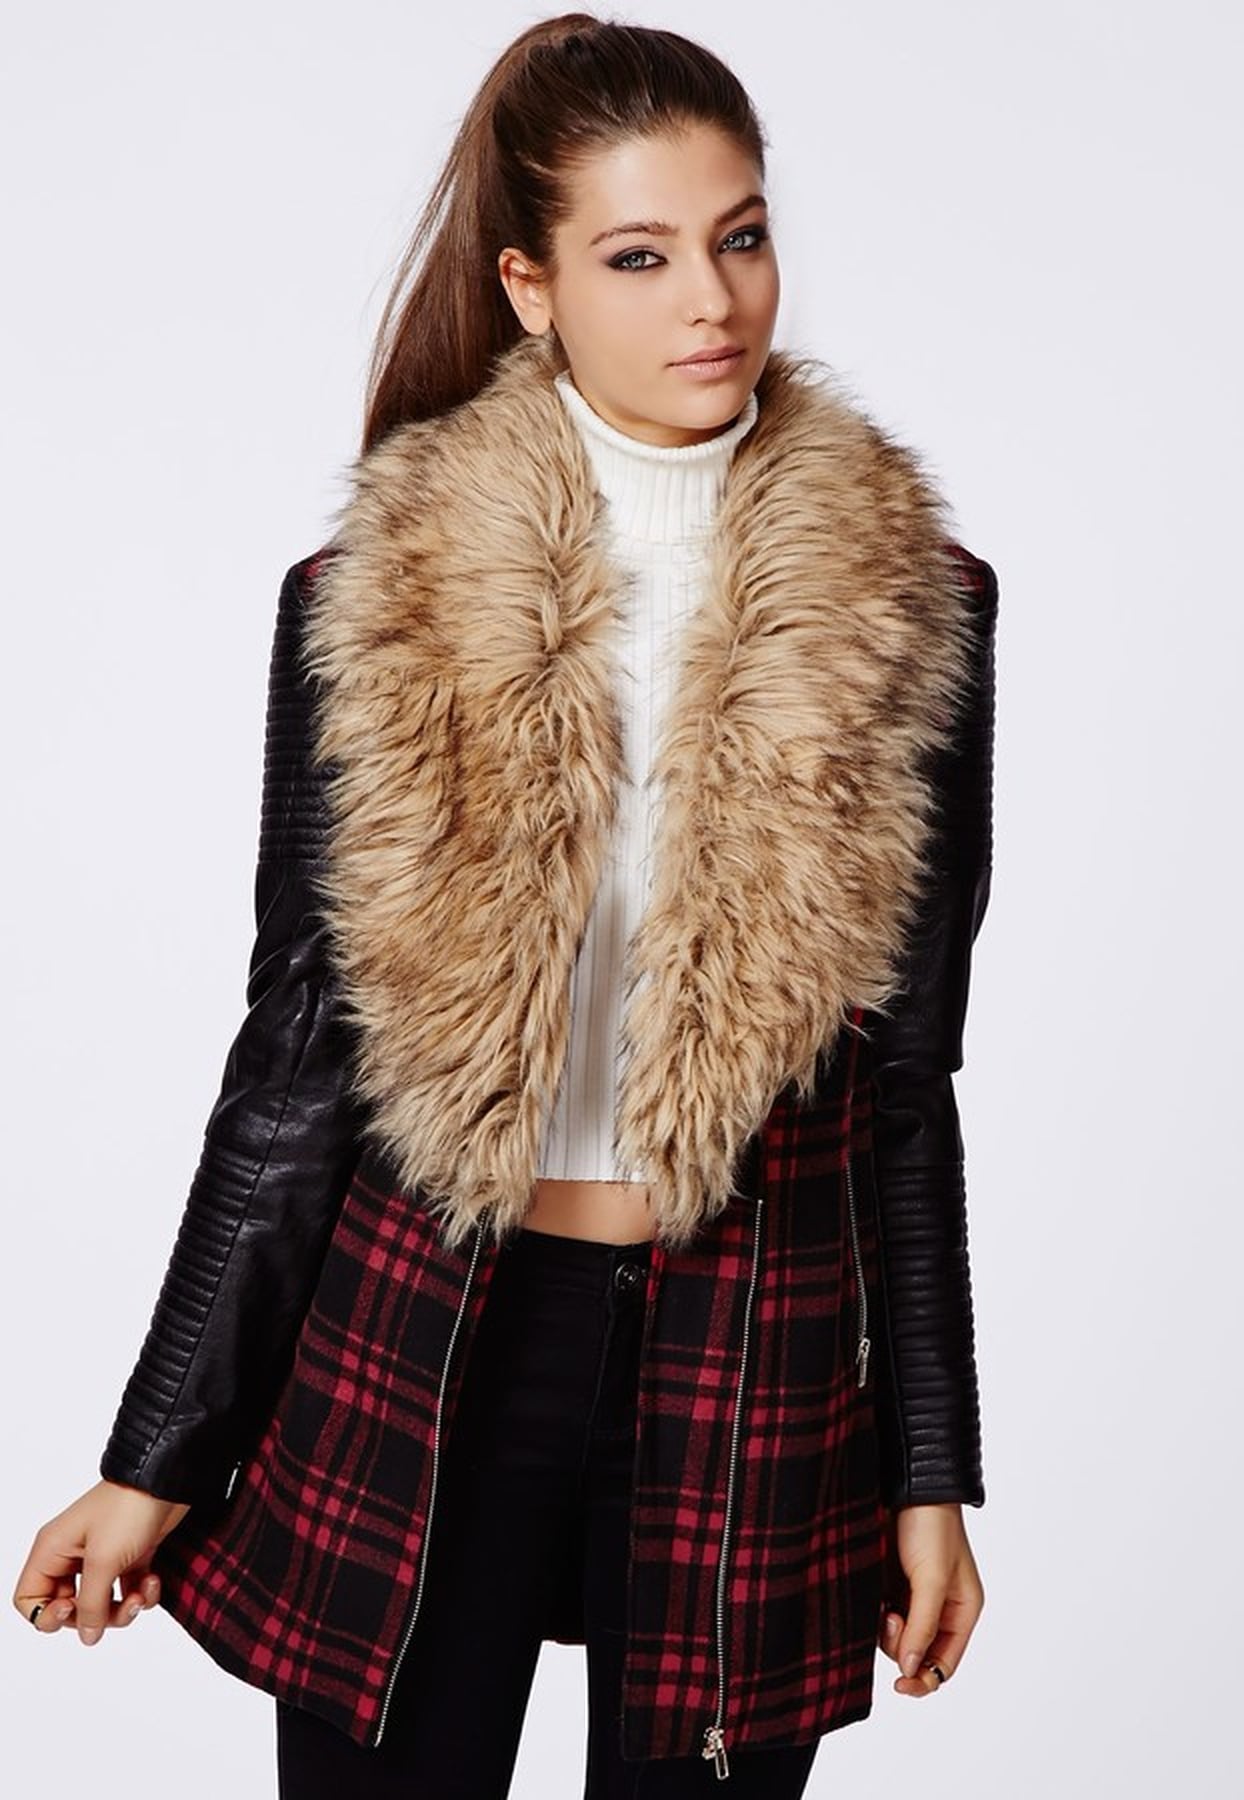 Faux Fur Jackets and Vests | POPSUGAR Fashion